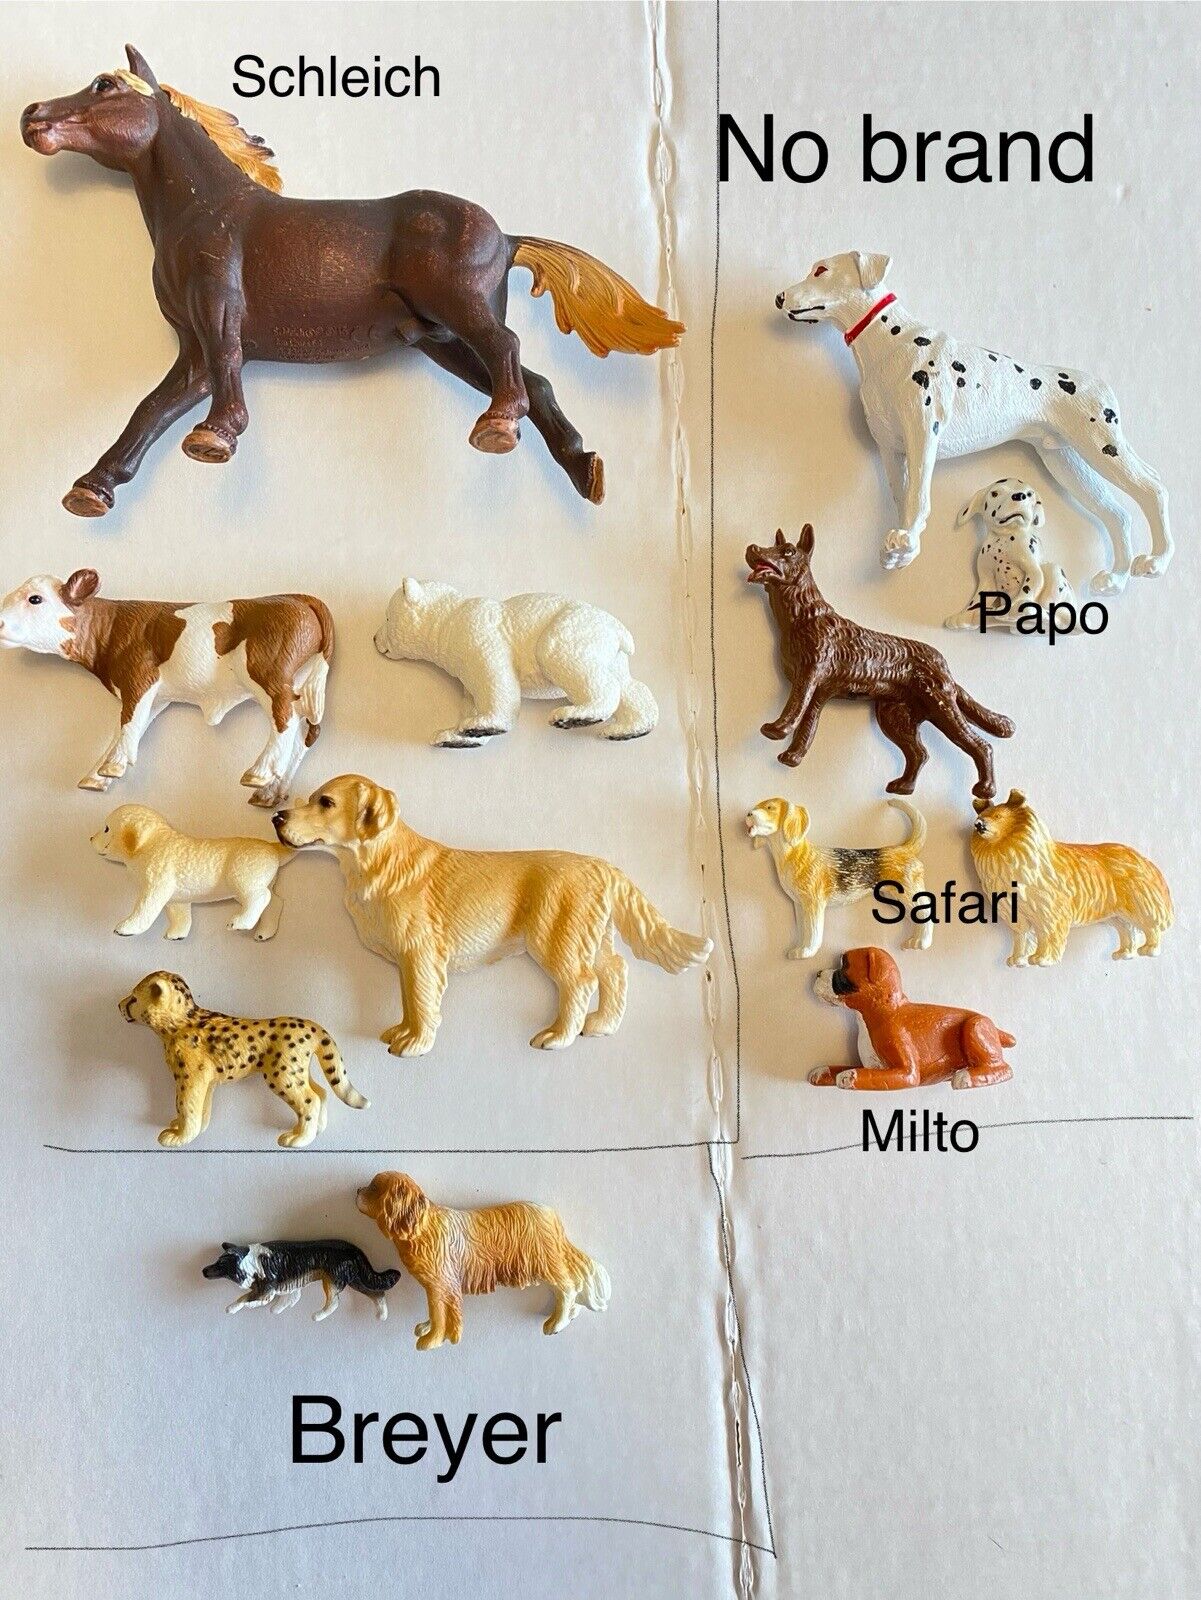 Schleich Breyer Papo Safari Milto Mixed Lot  Animal Figures Dogs Bear Cow Horse